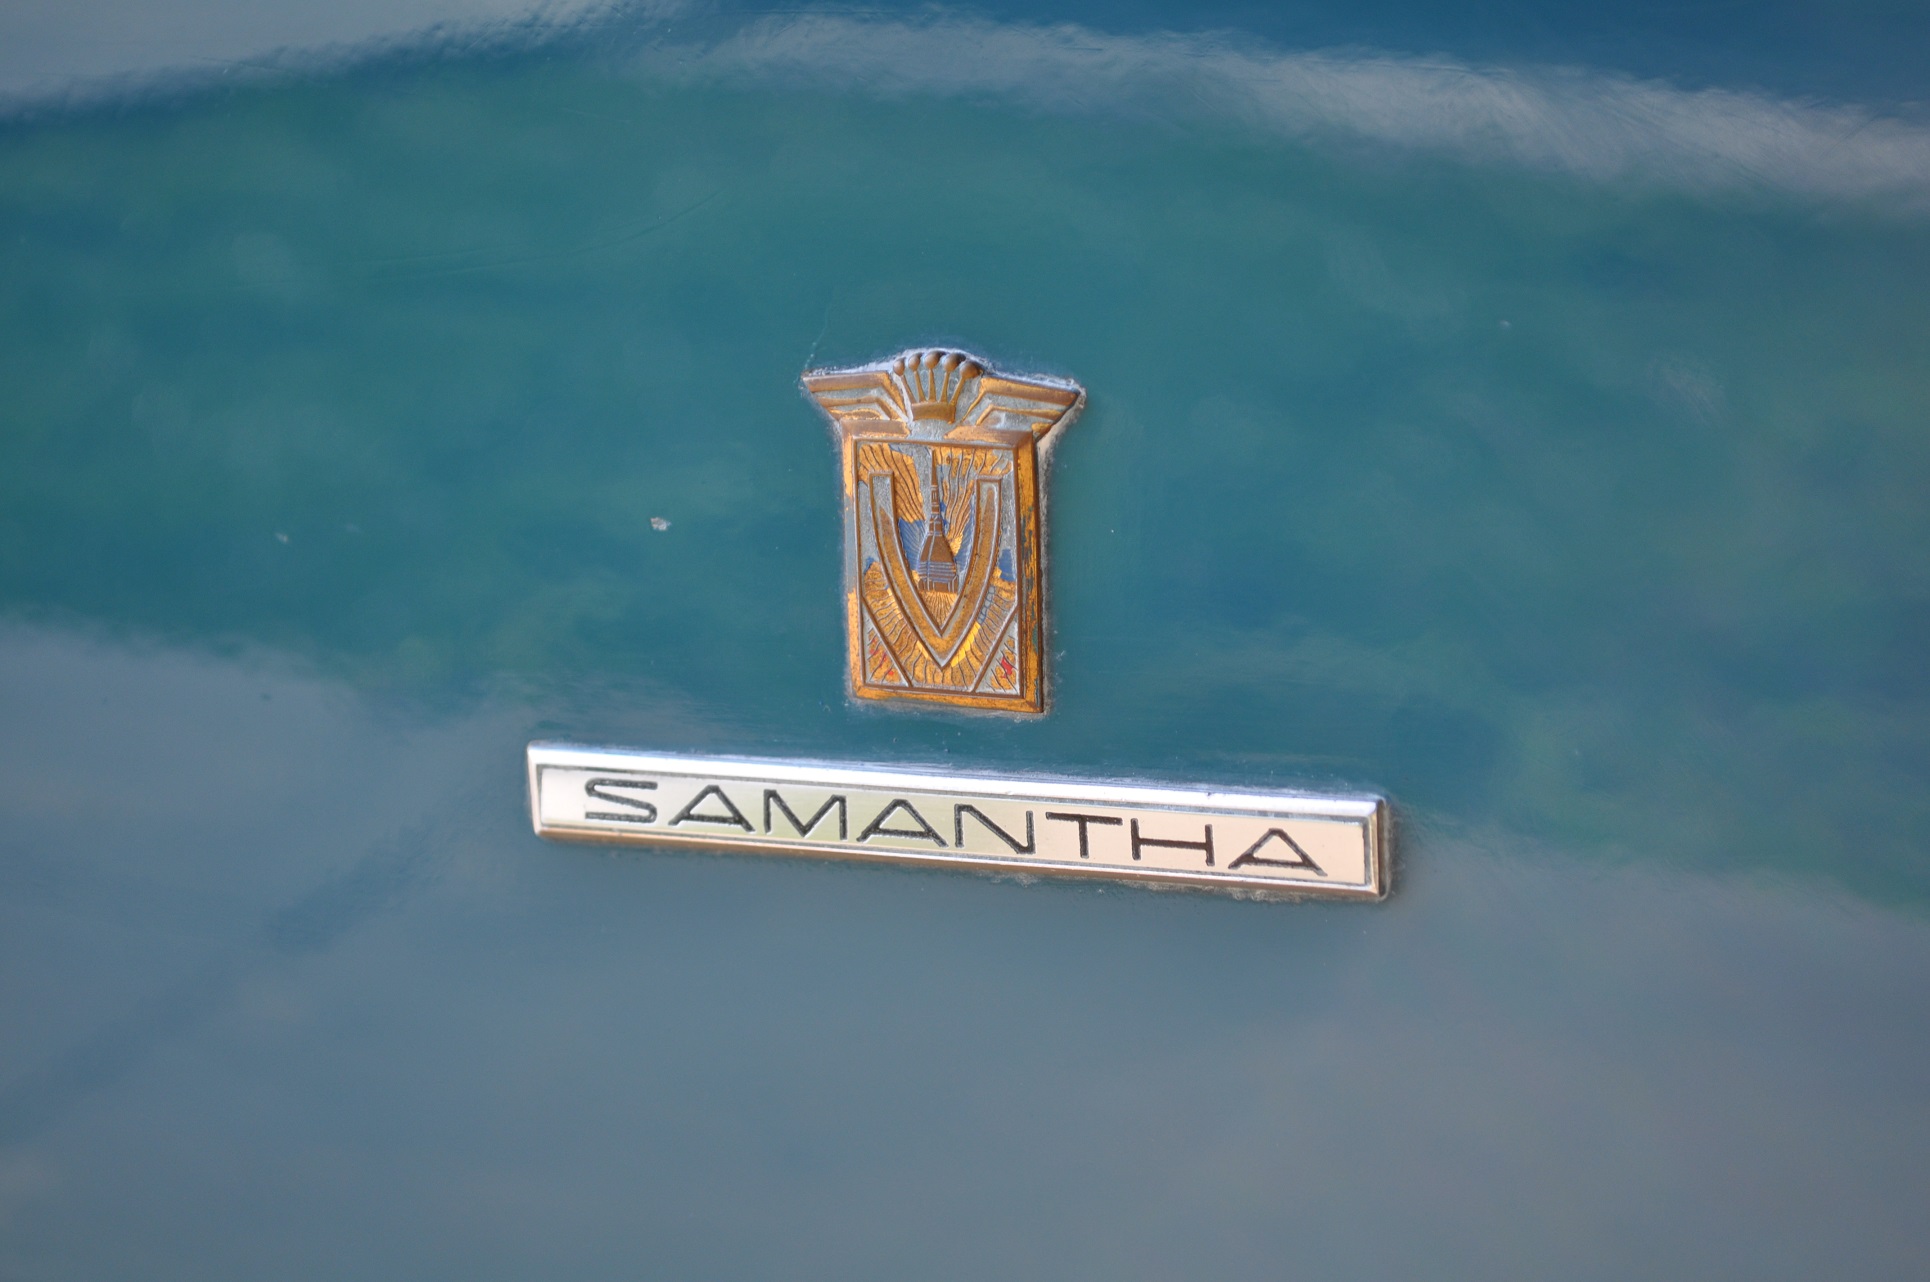 Fiat, 1968, 125 Samantha